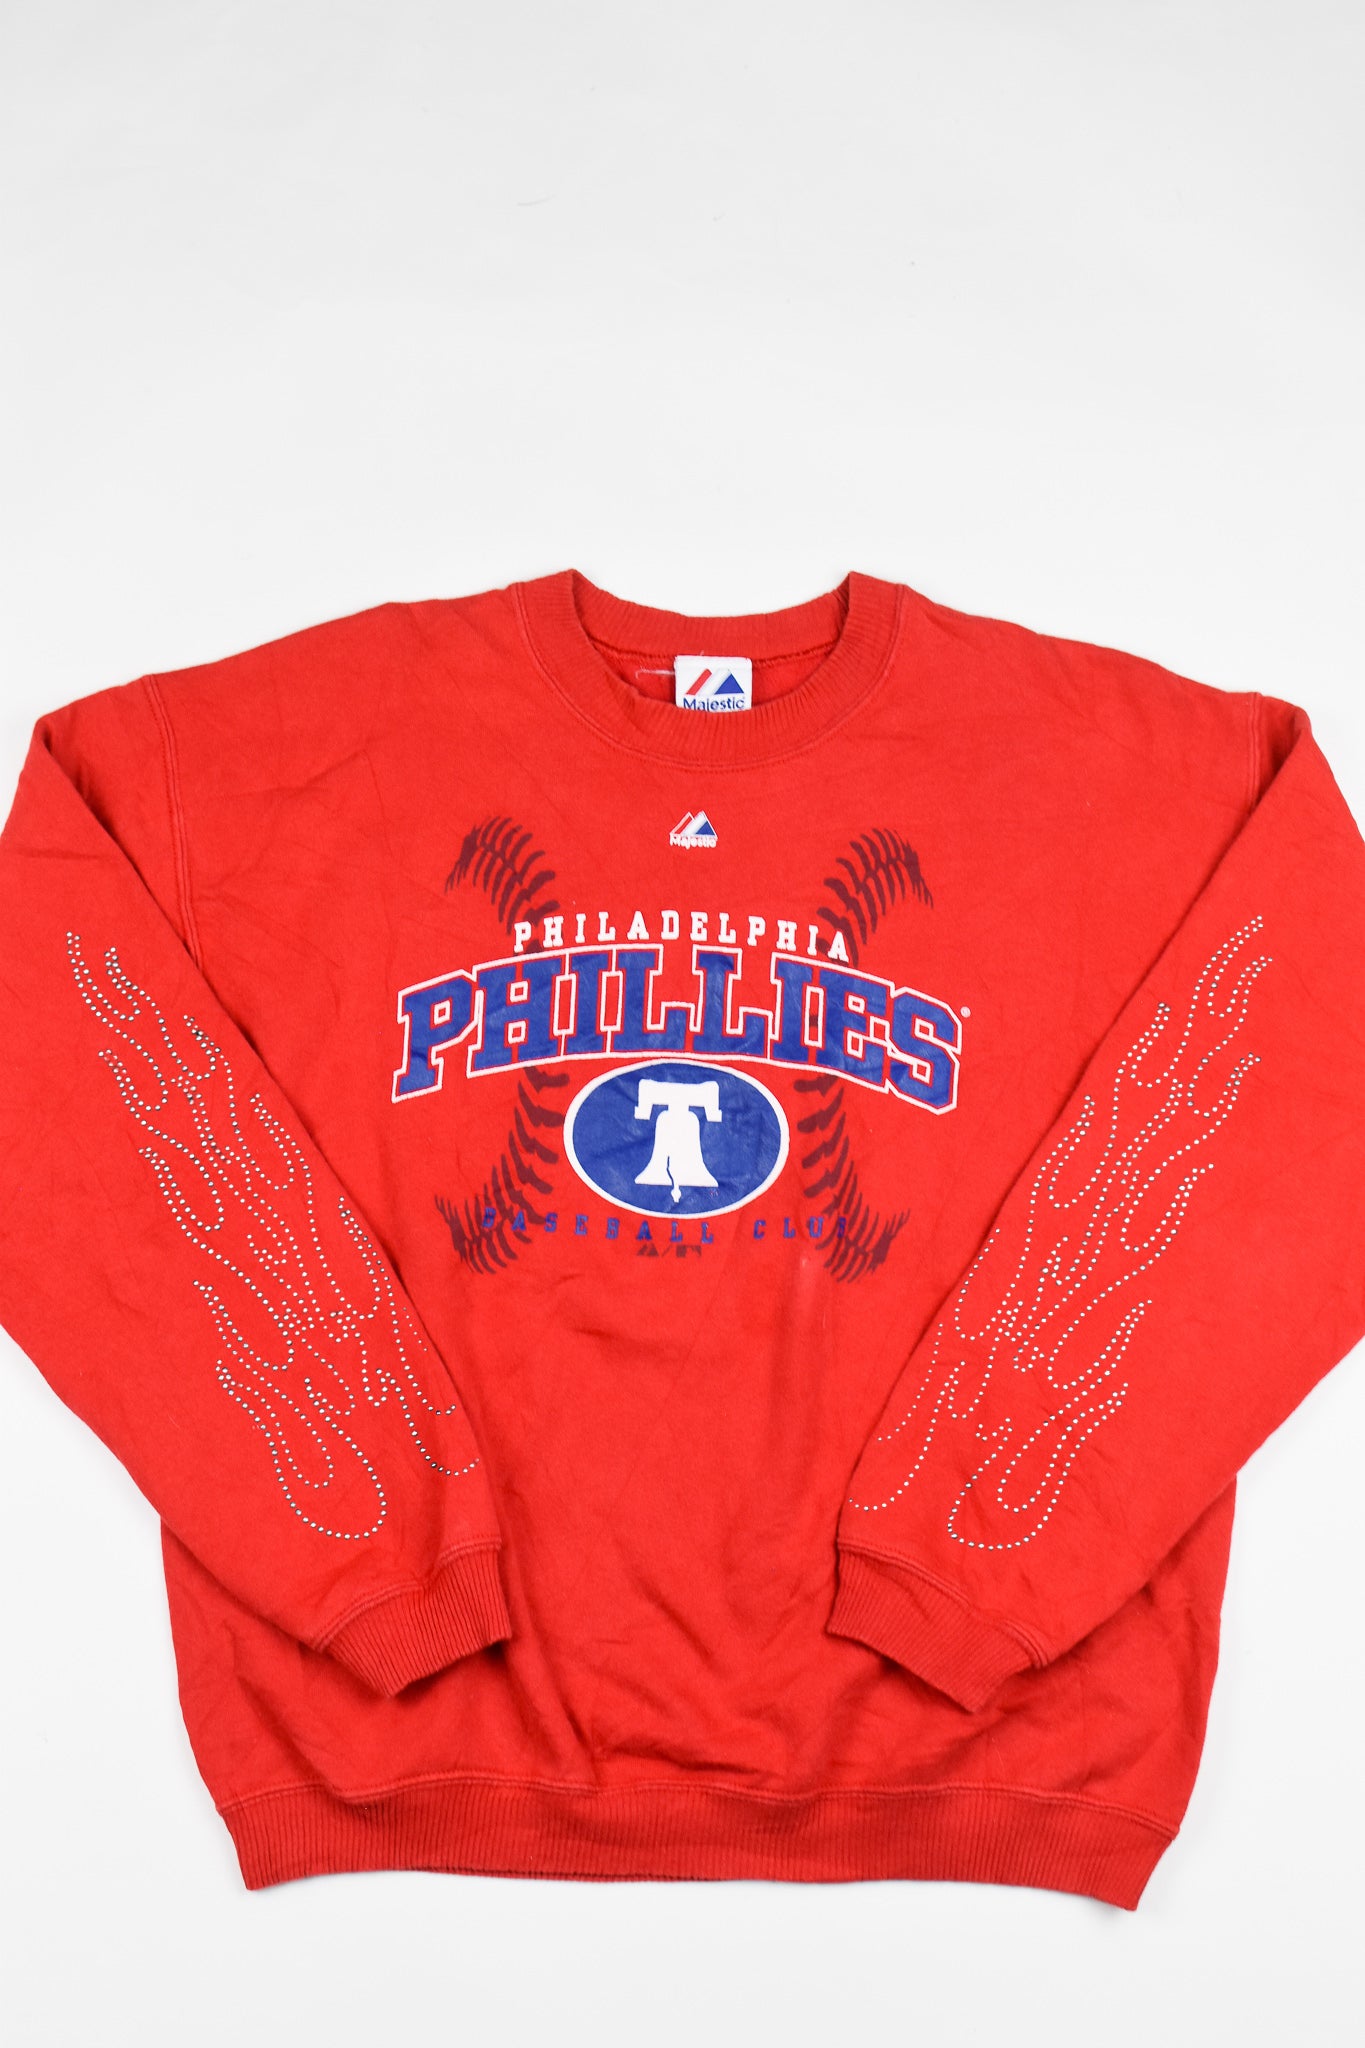 Upcycled Vintage Phillies Flame Sweatshirt